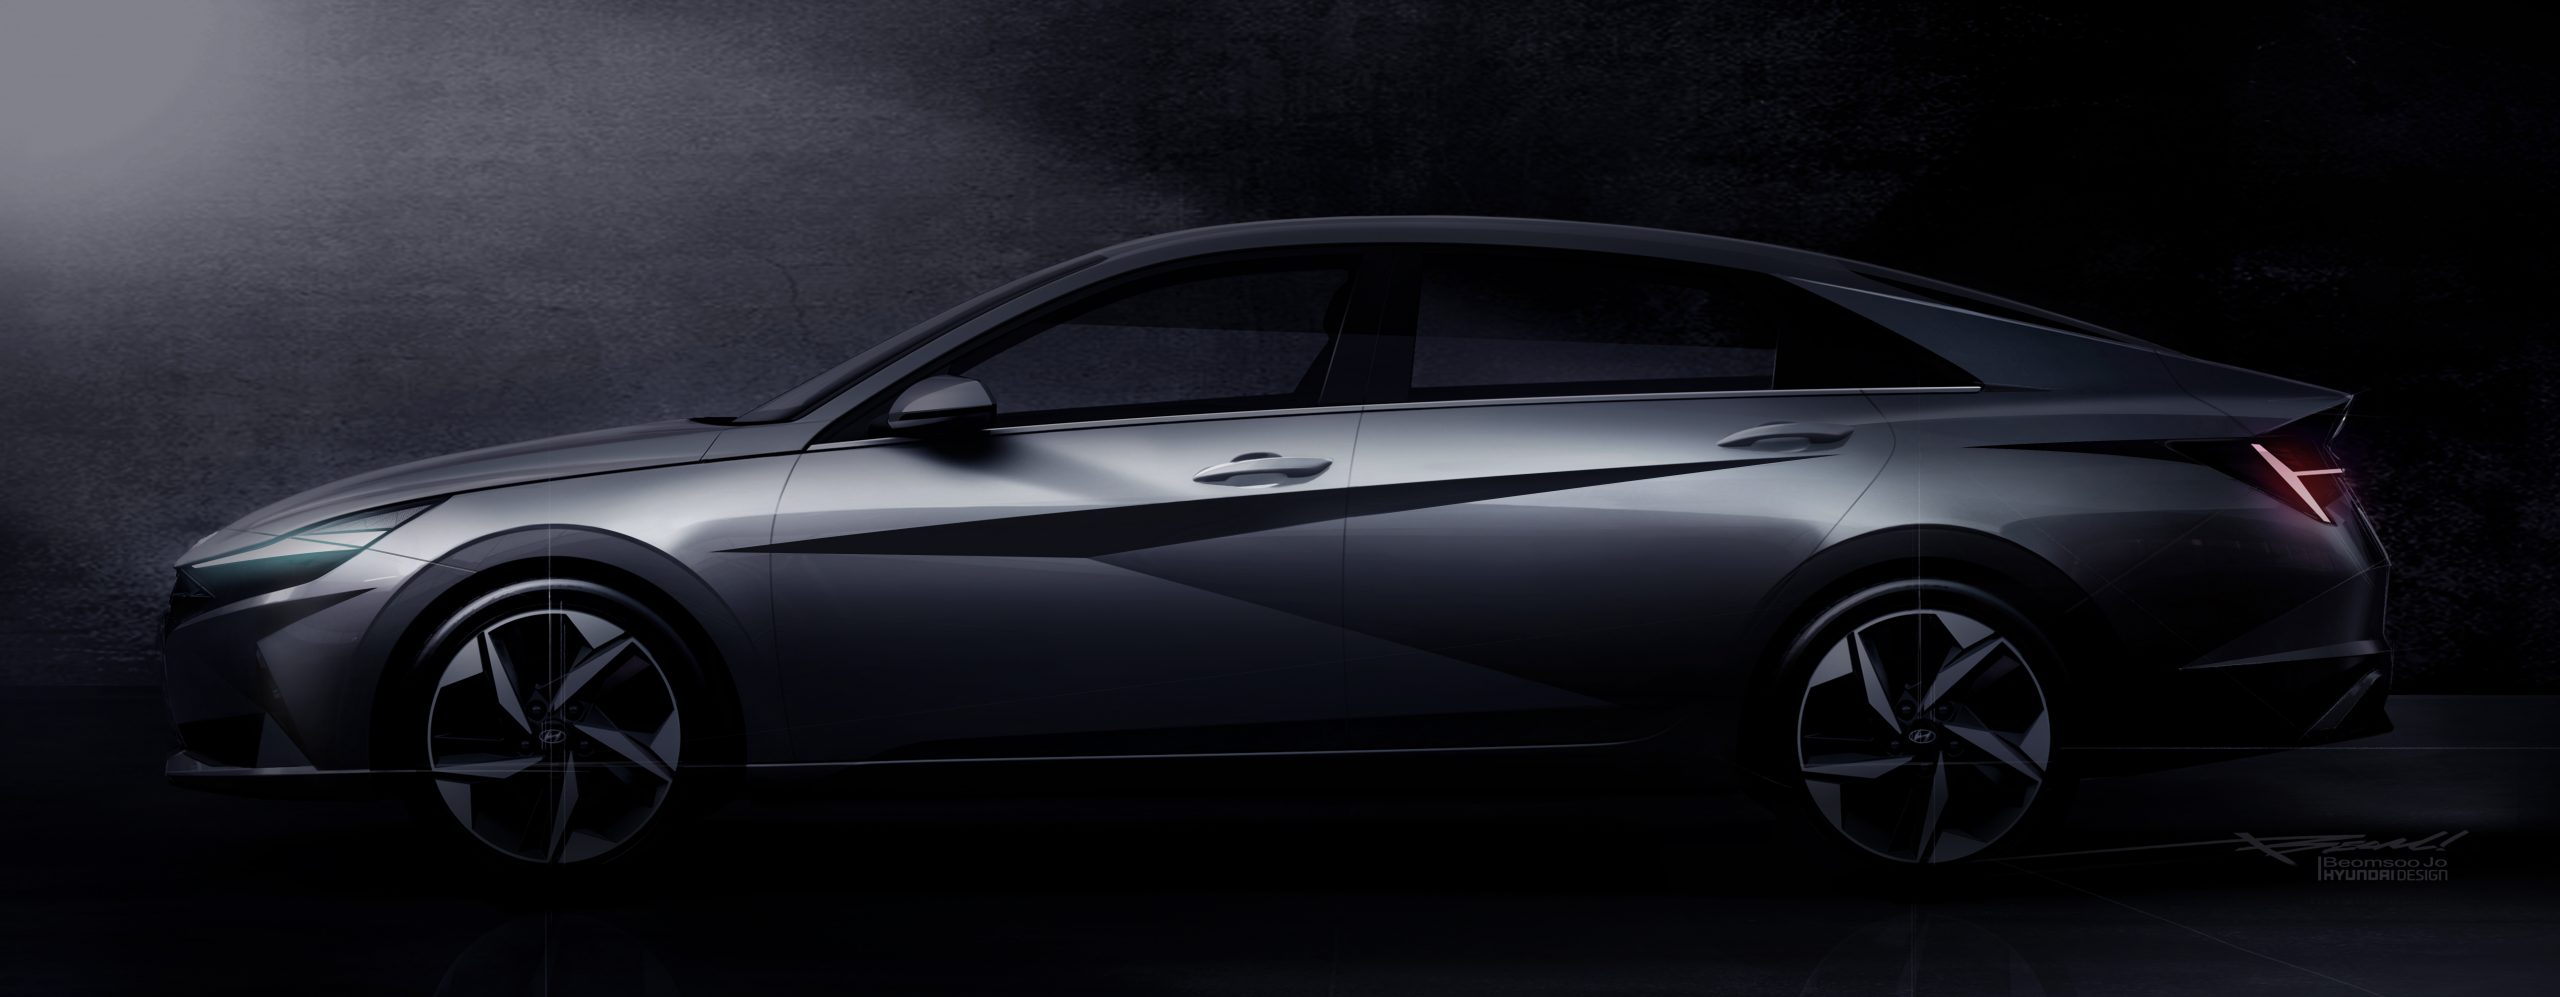 Hyundai Motor Previews All-New 2021 Hyundai Elantra Set to Debut at a World Premiere Event in Hollywood